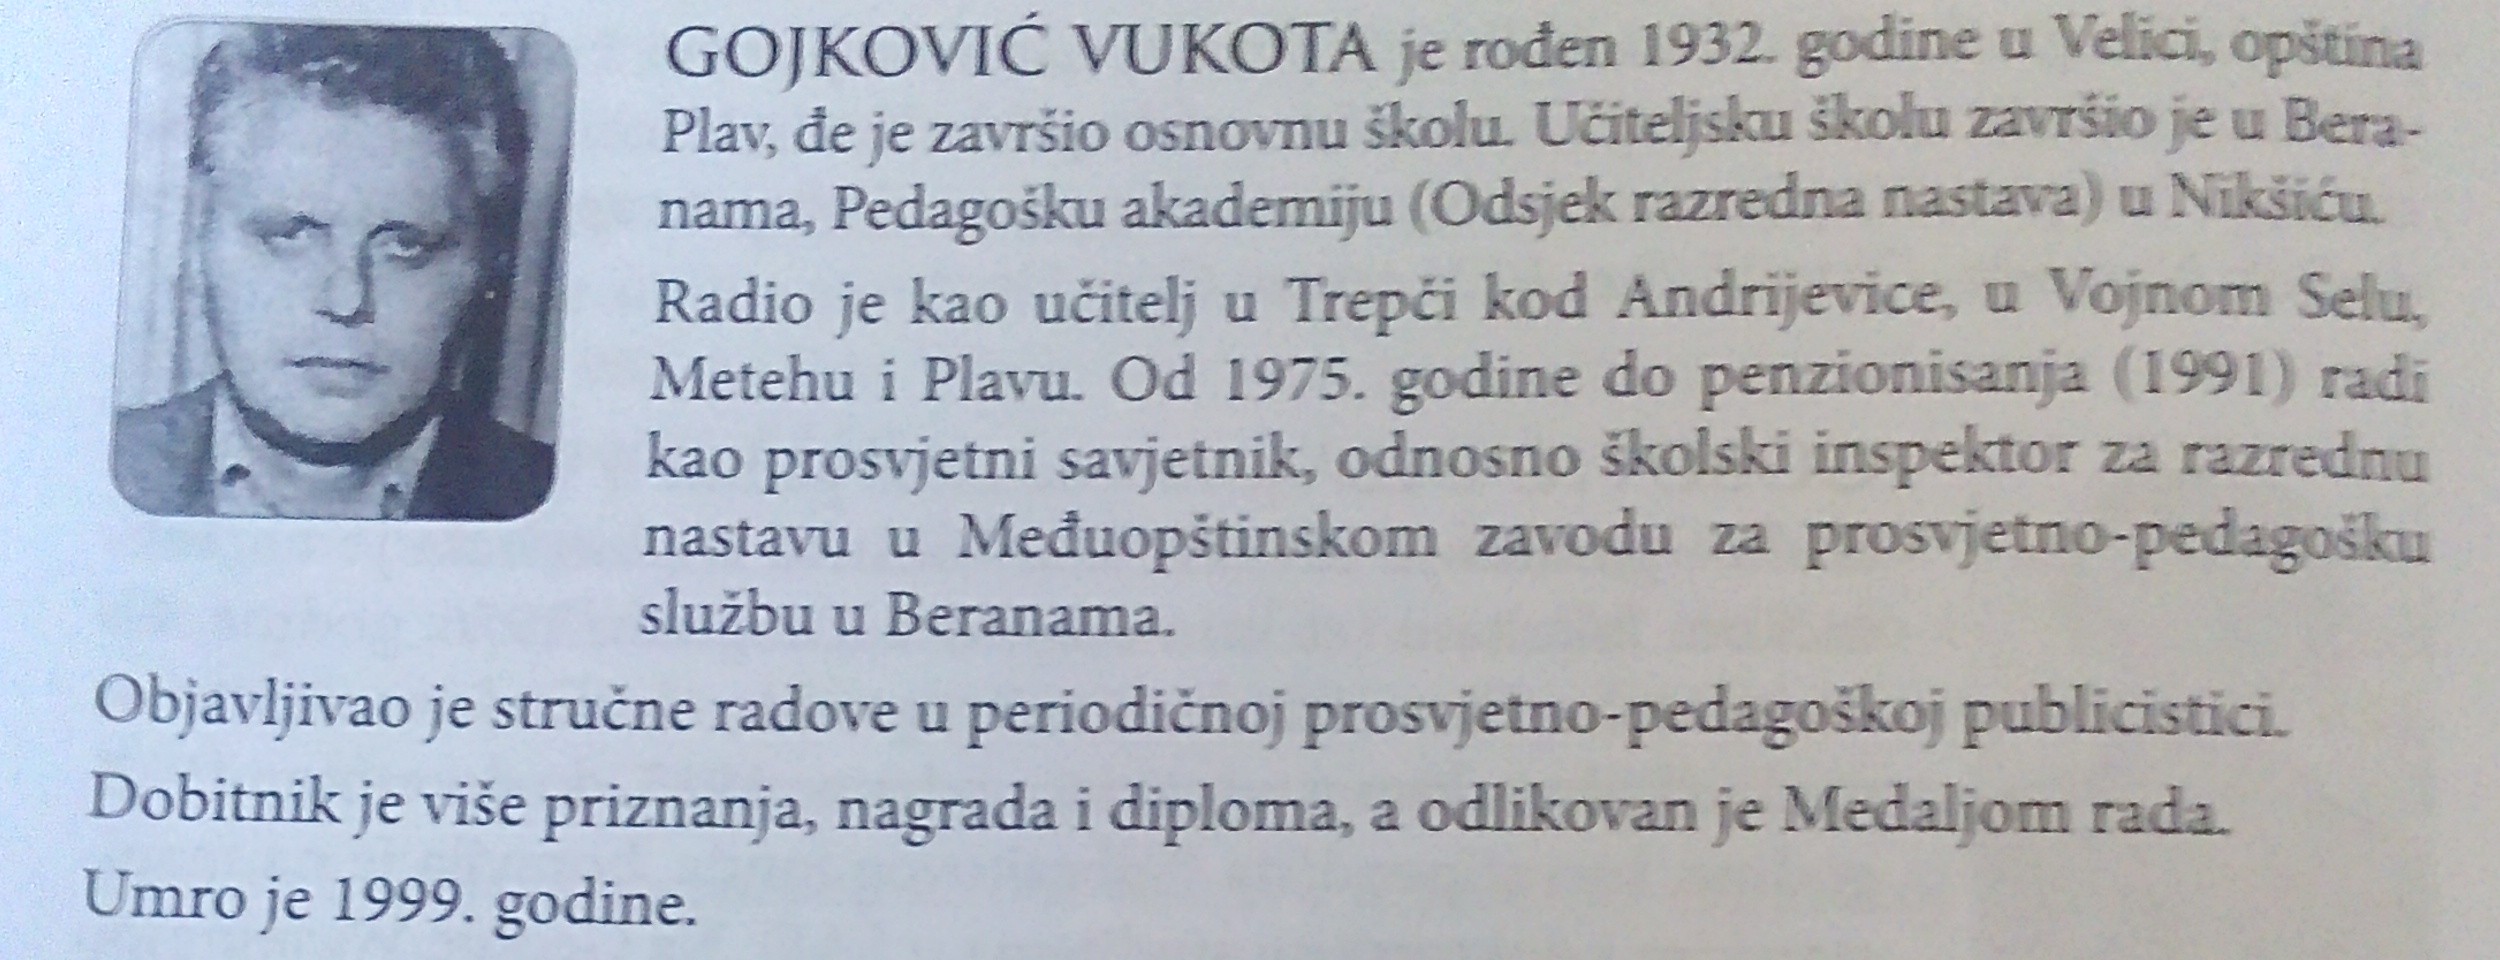 Gojković Vukota